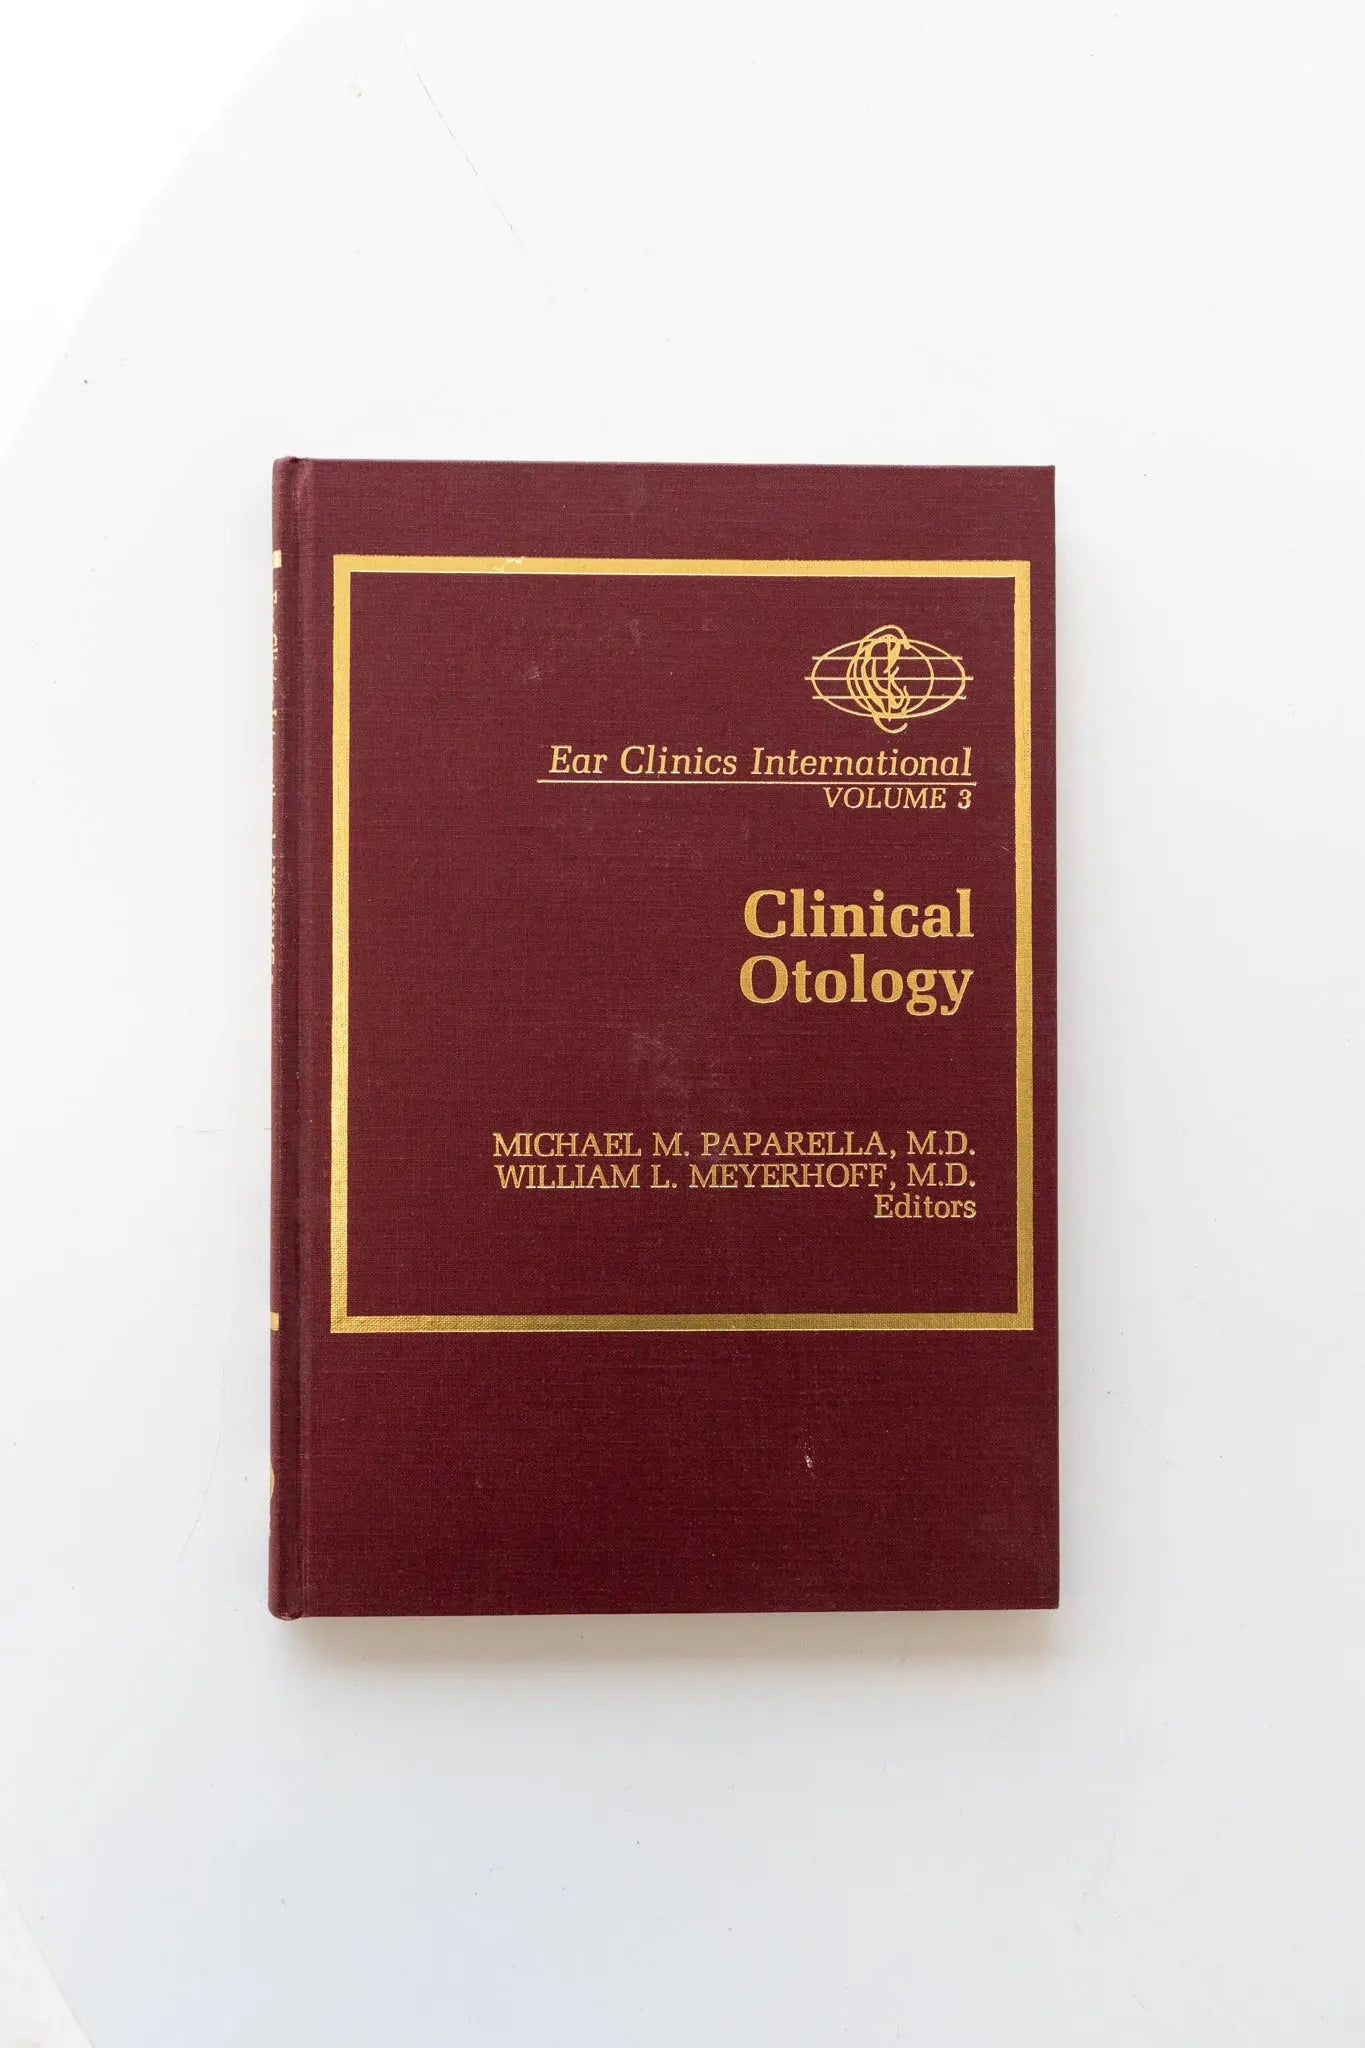 Clinical Otology, Volume 3